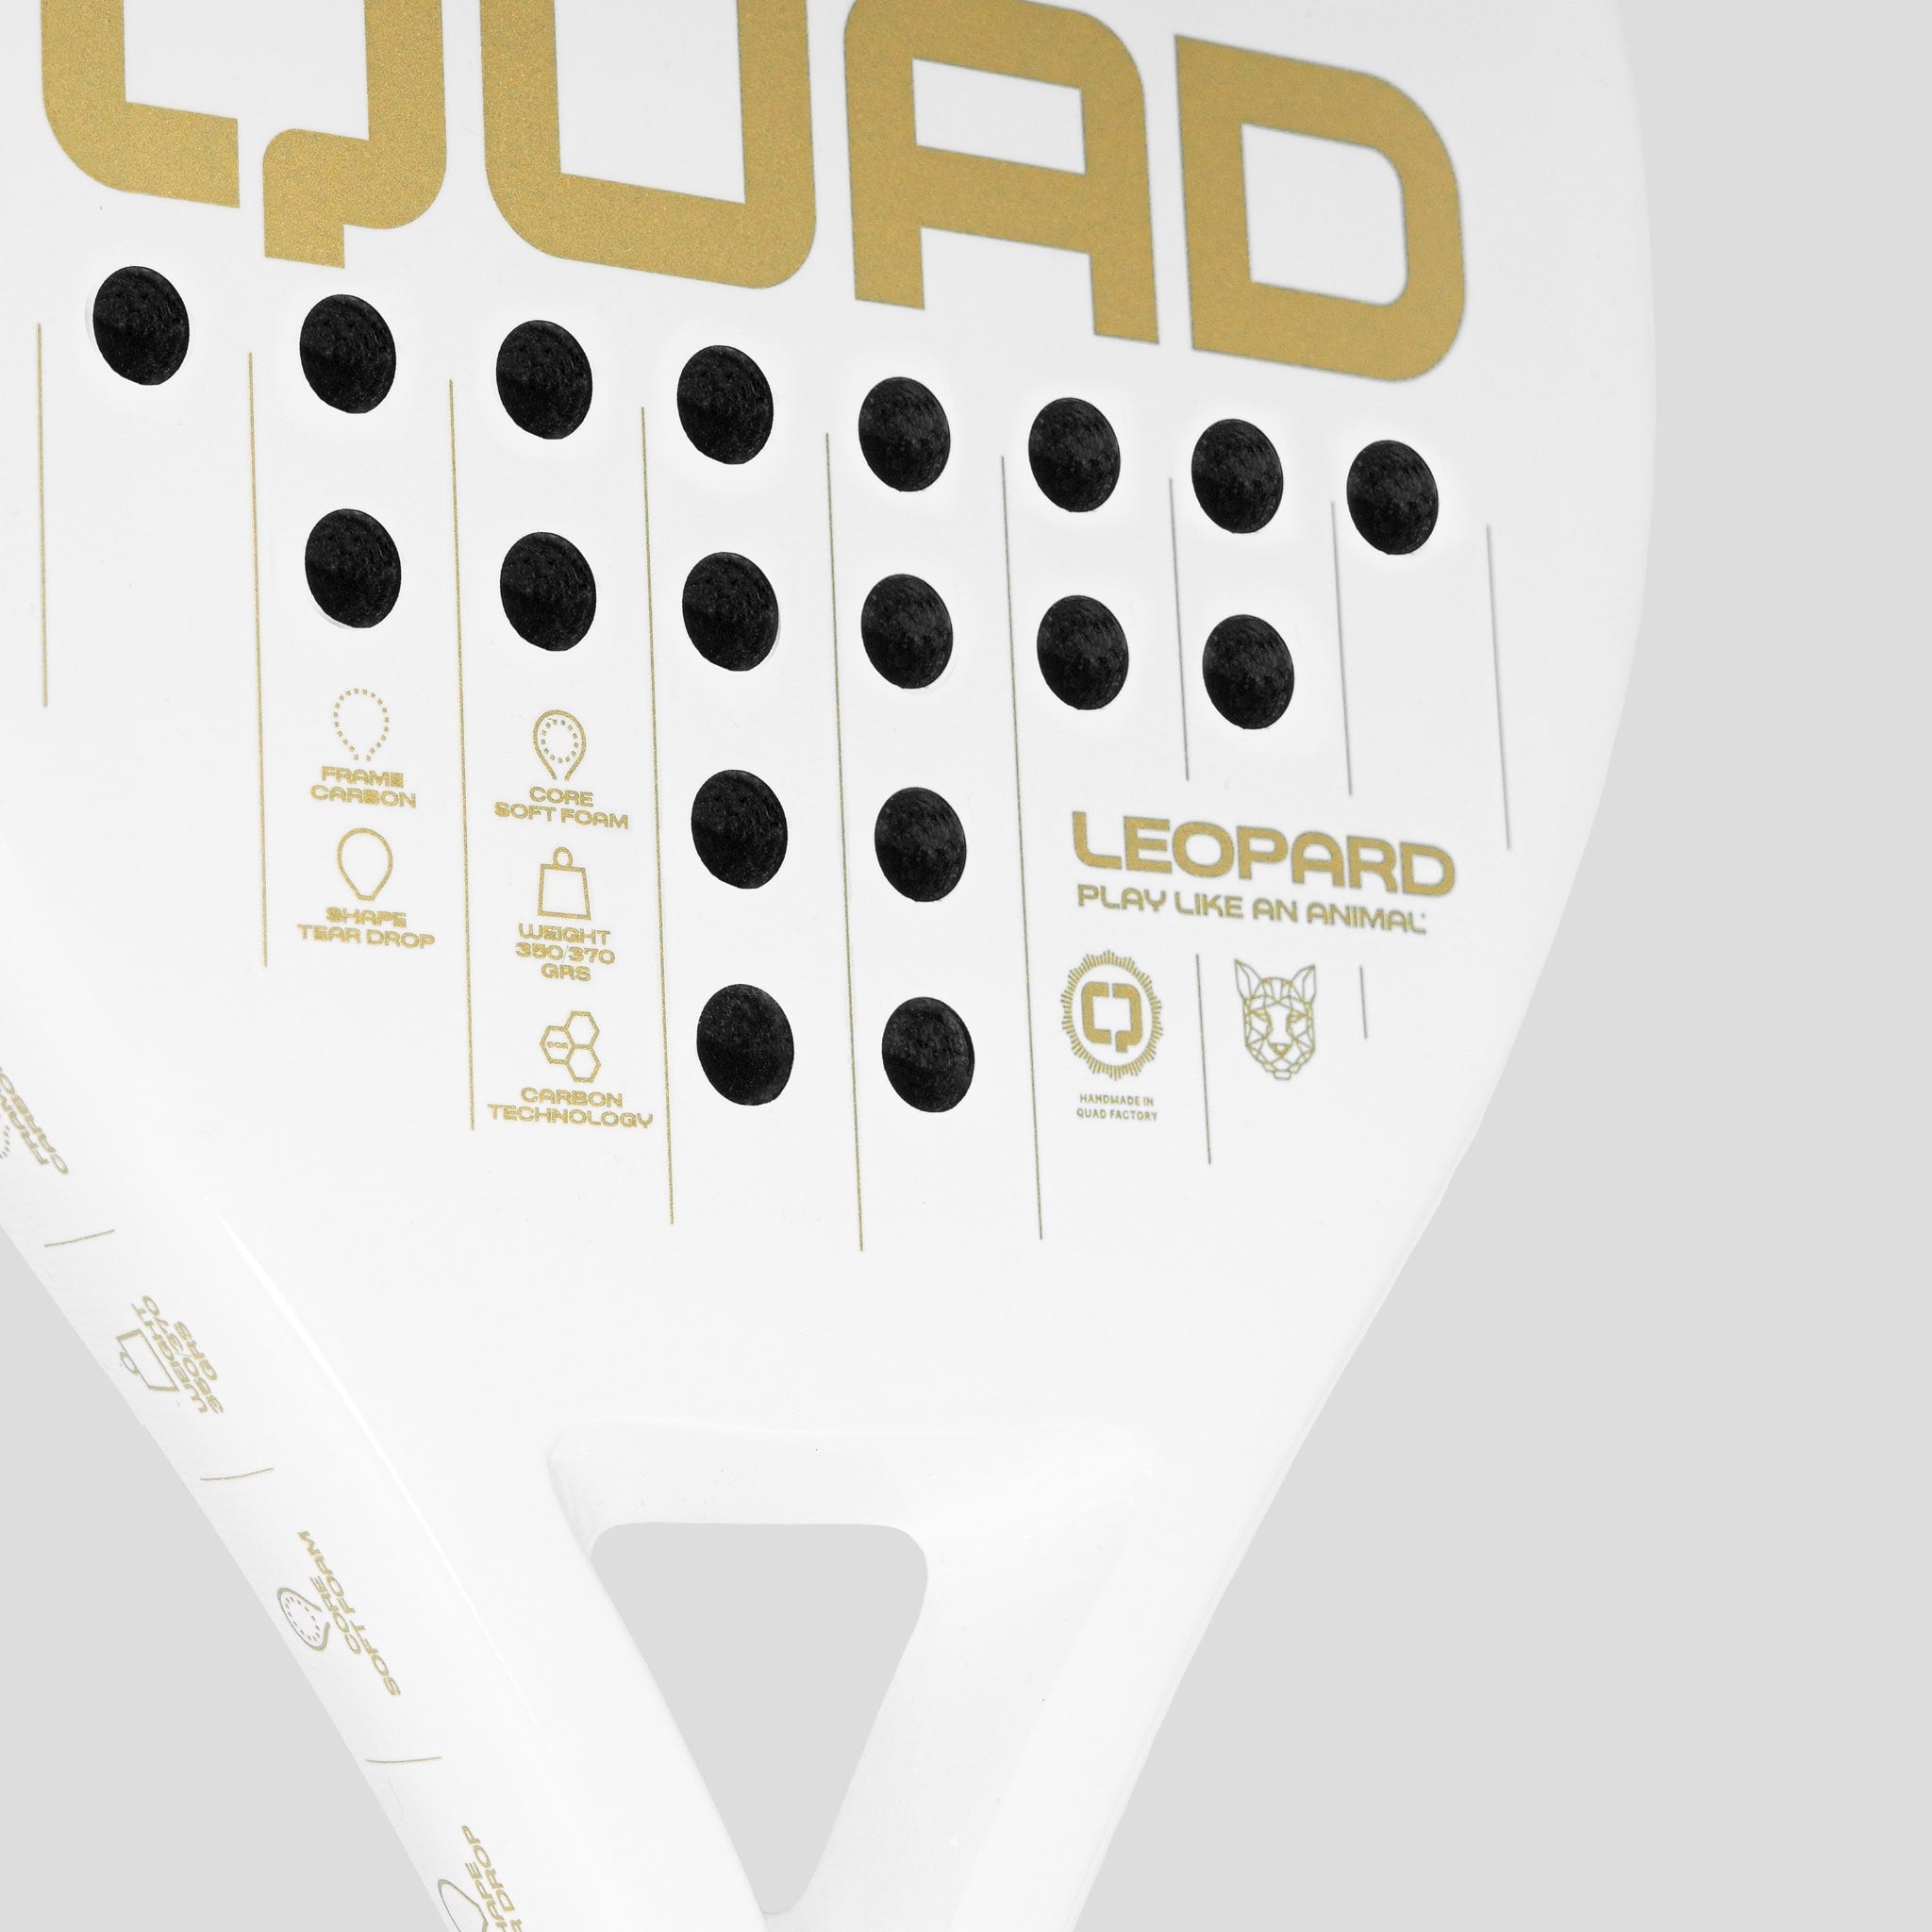 QUAD Leopard padel racket front detail